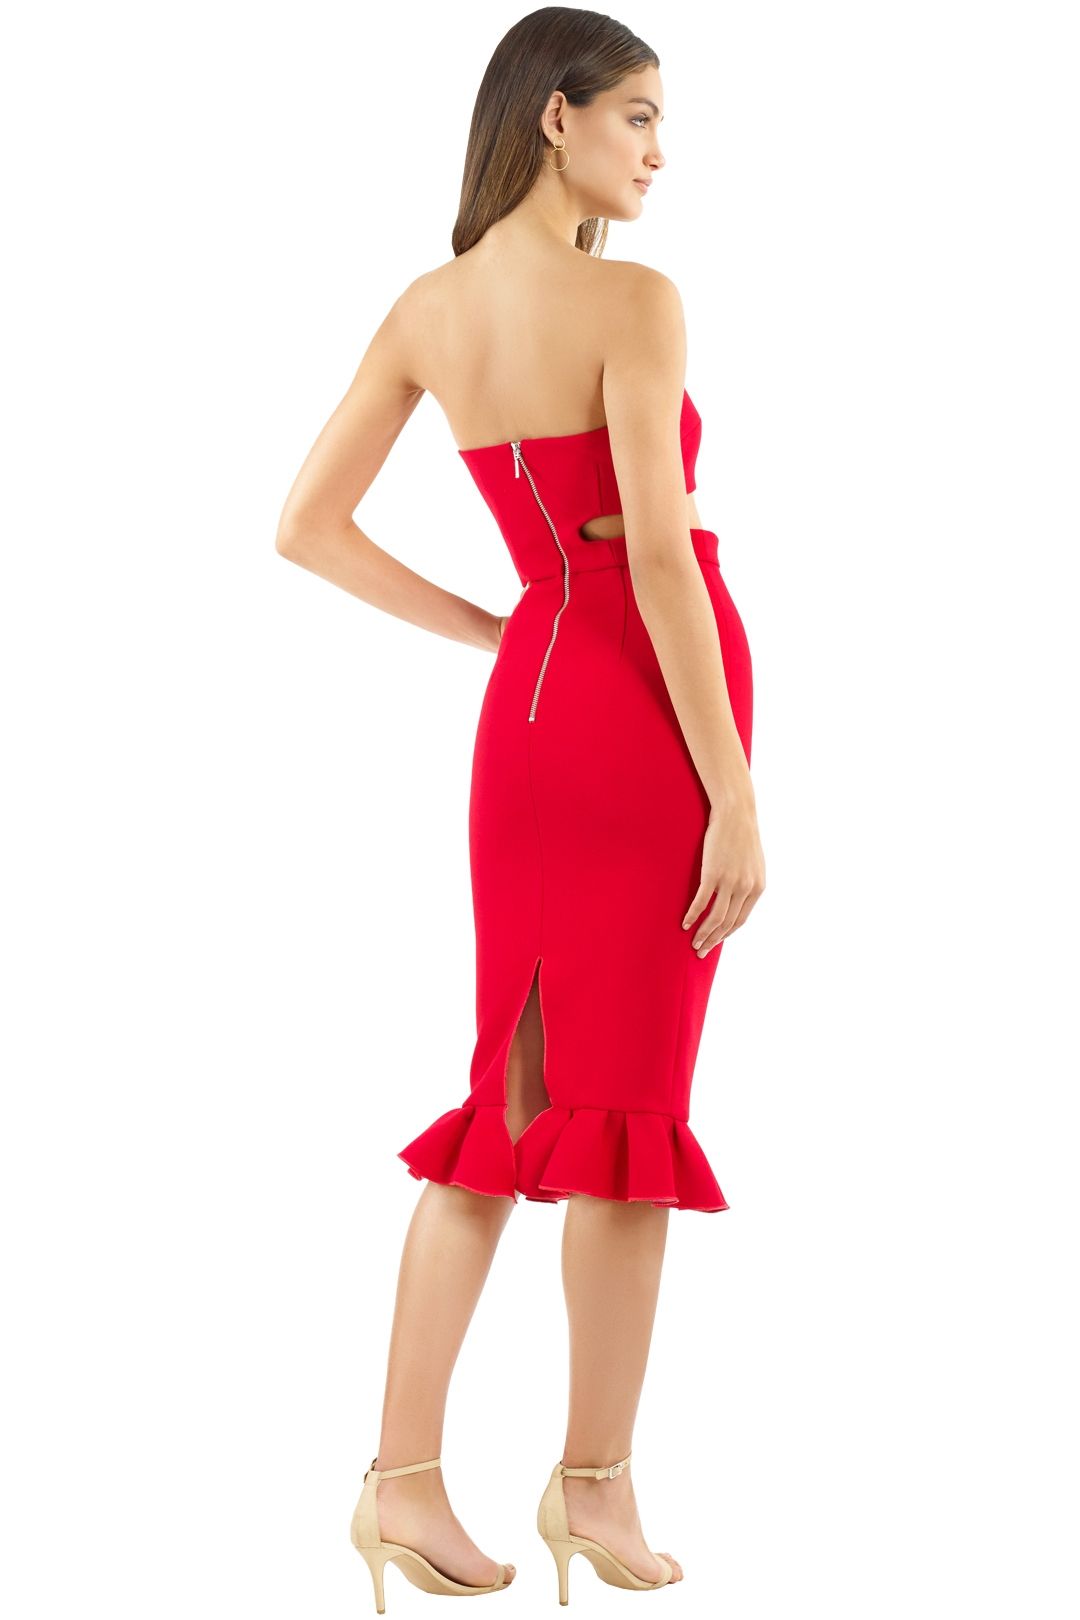 Yeojin Bae - Kaitlin Dress - Red - Back